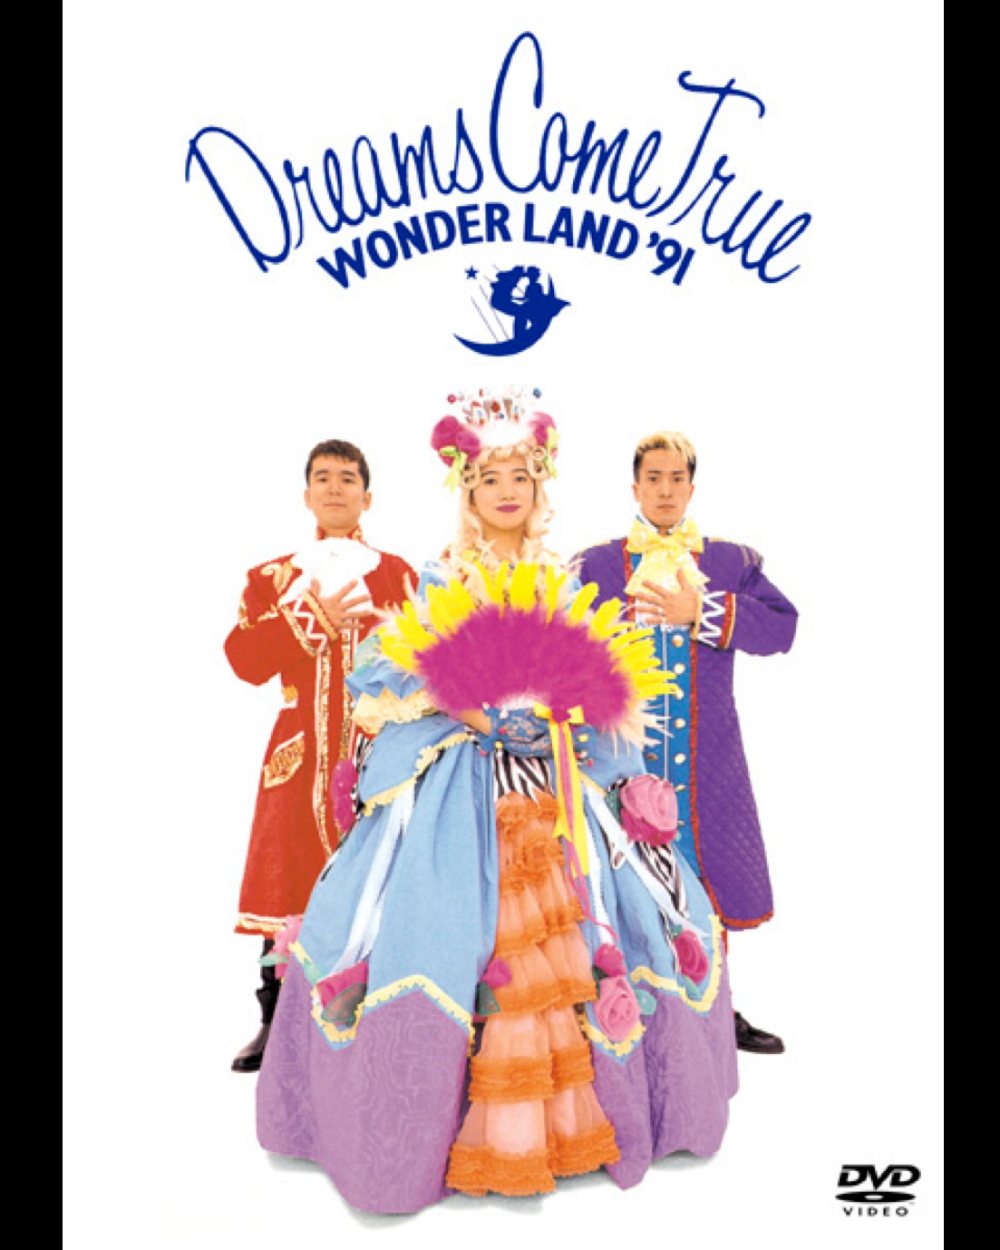 DREAMS COME TRUE【DVD】史上最強の移動遊園地 DREAMS COME TRUE WONDERLAND '91